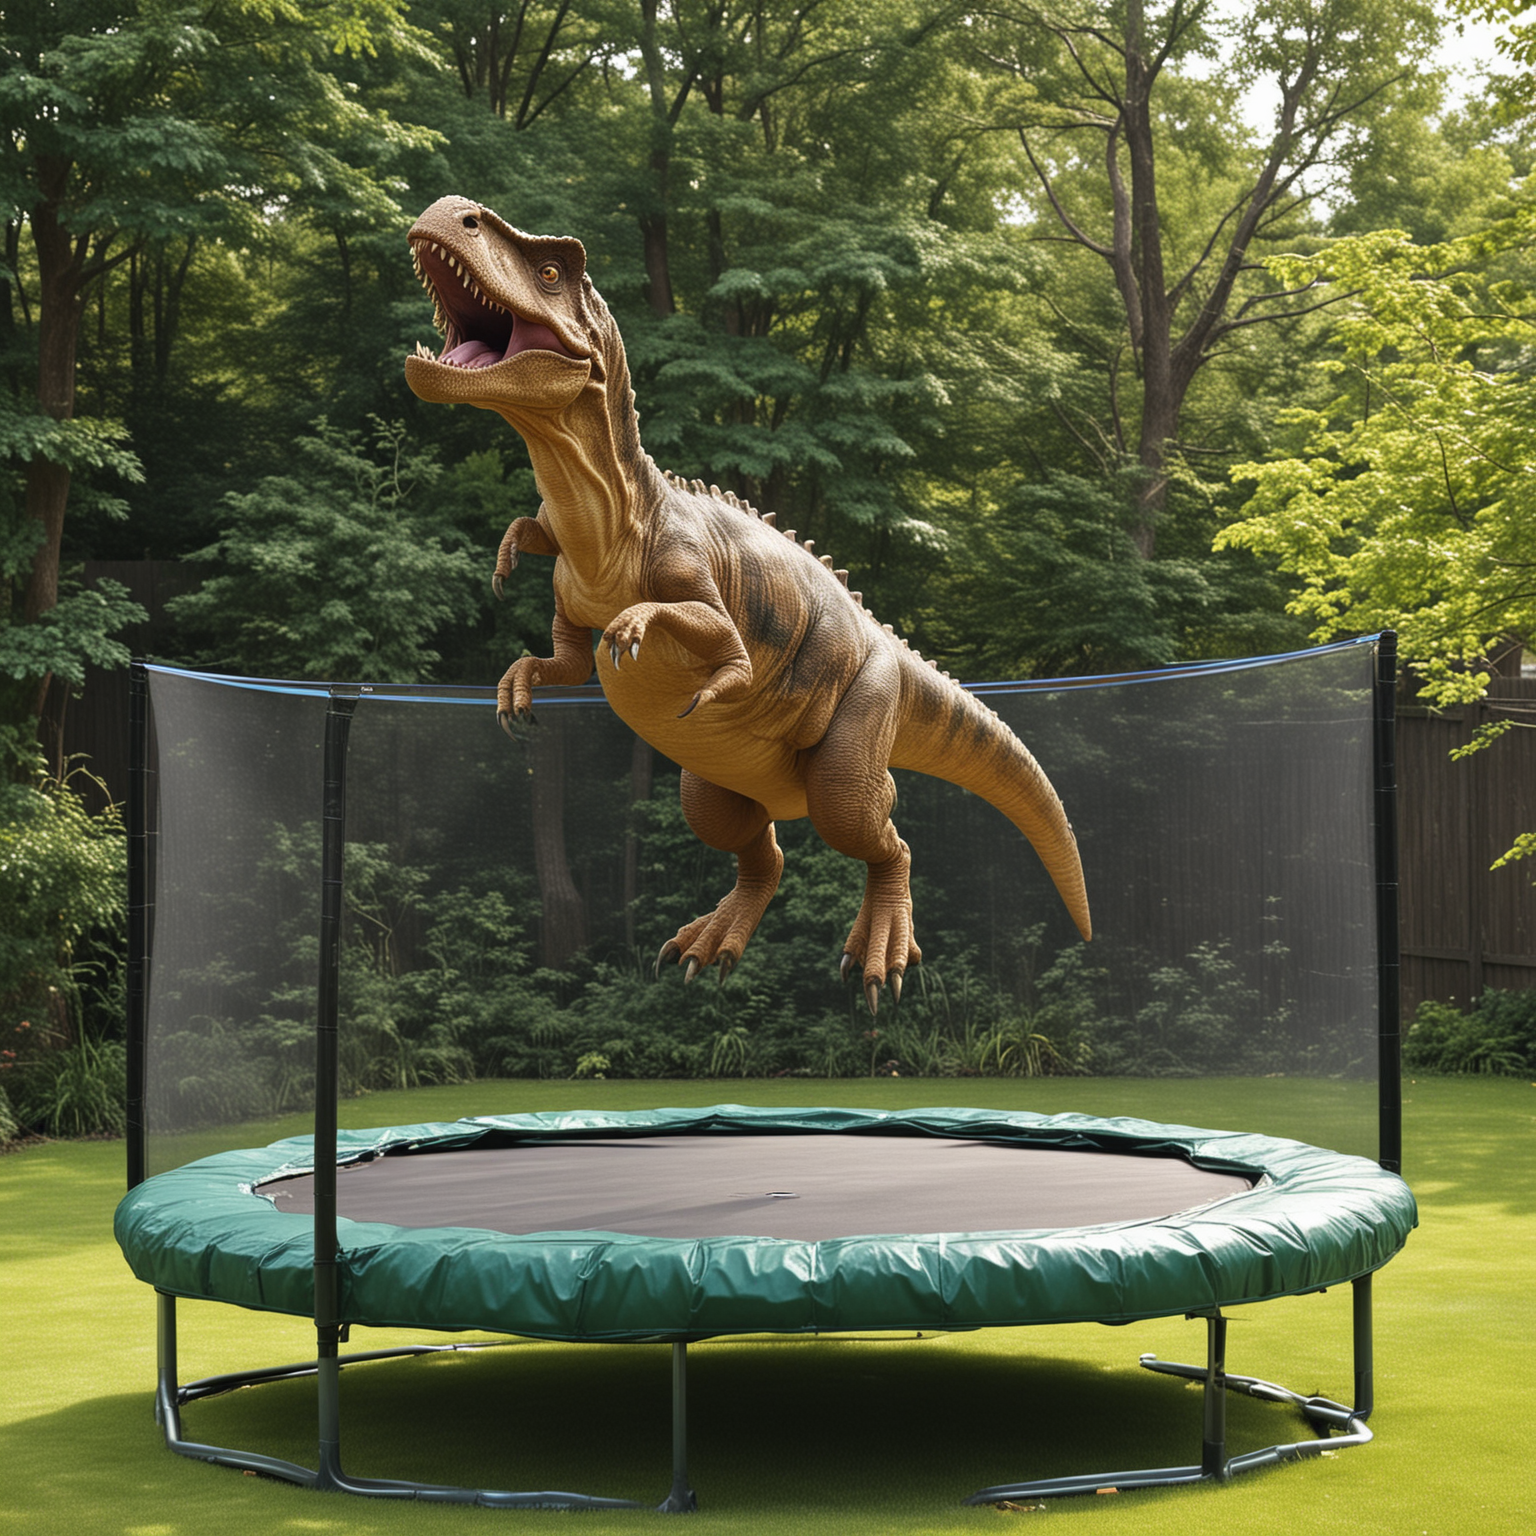 Playful Dinosaur Bouncing on a Vibrant Trampoline